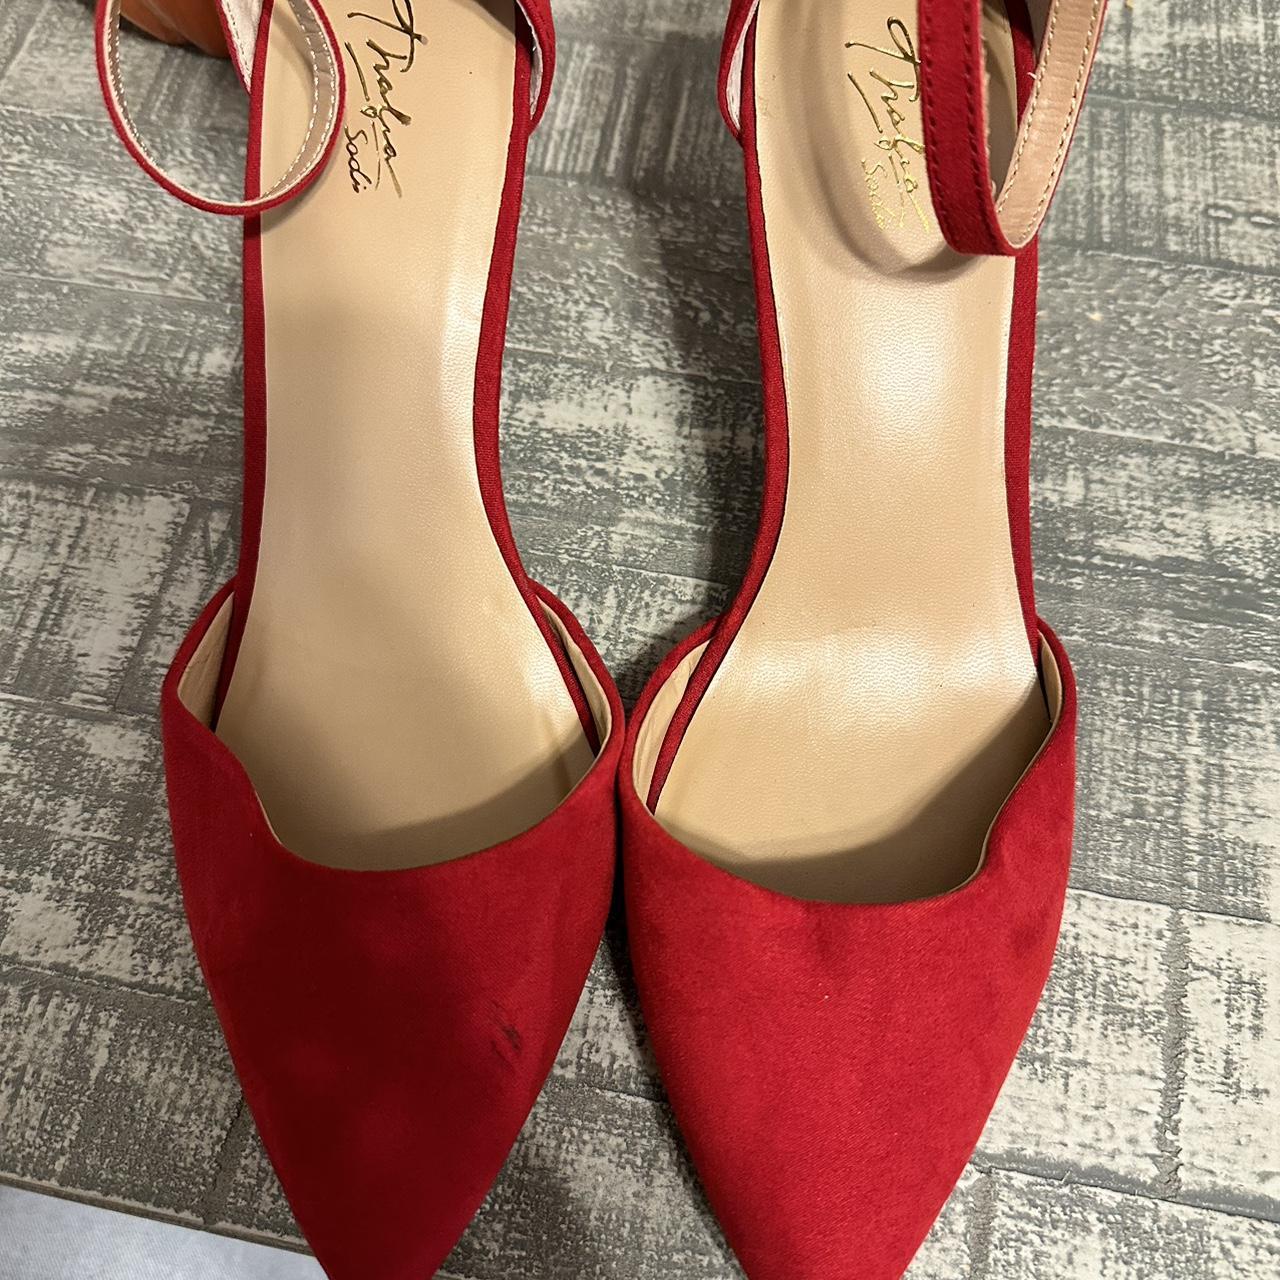 Red heals 2 inch Right shoe a black spot - Depop